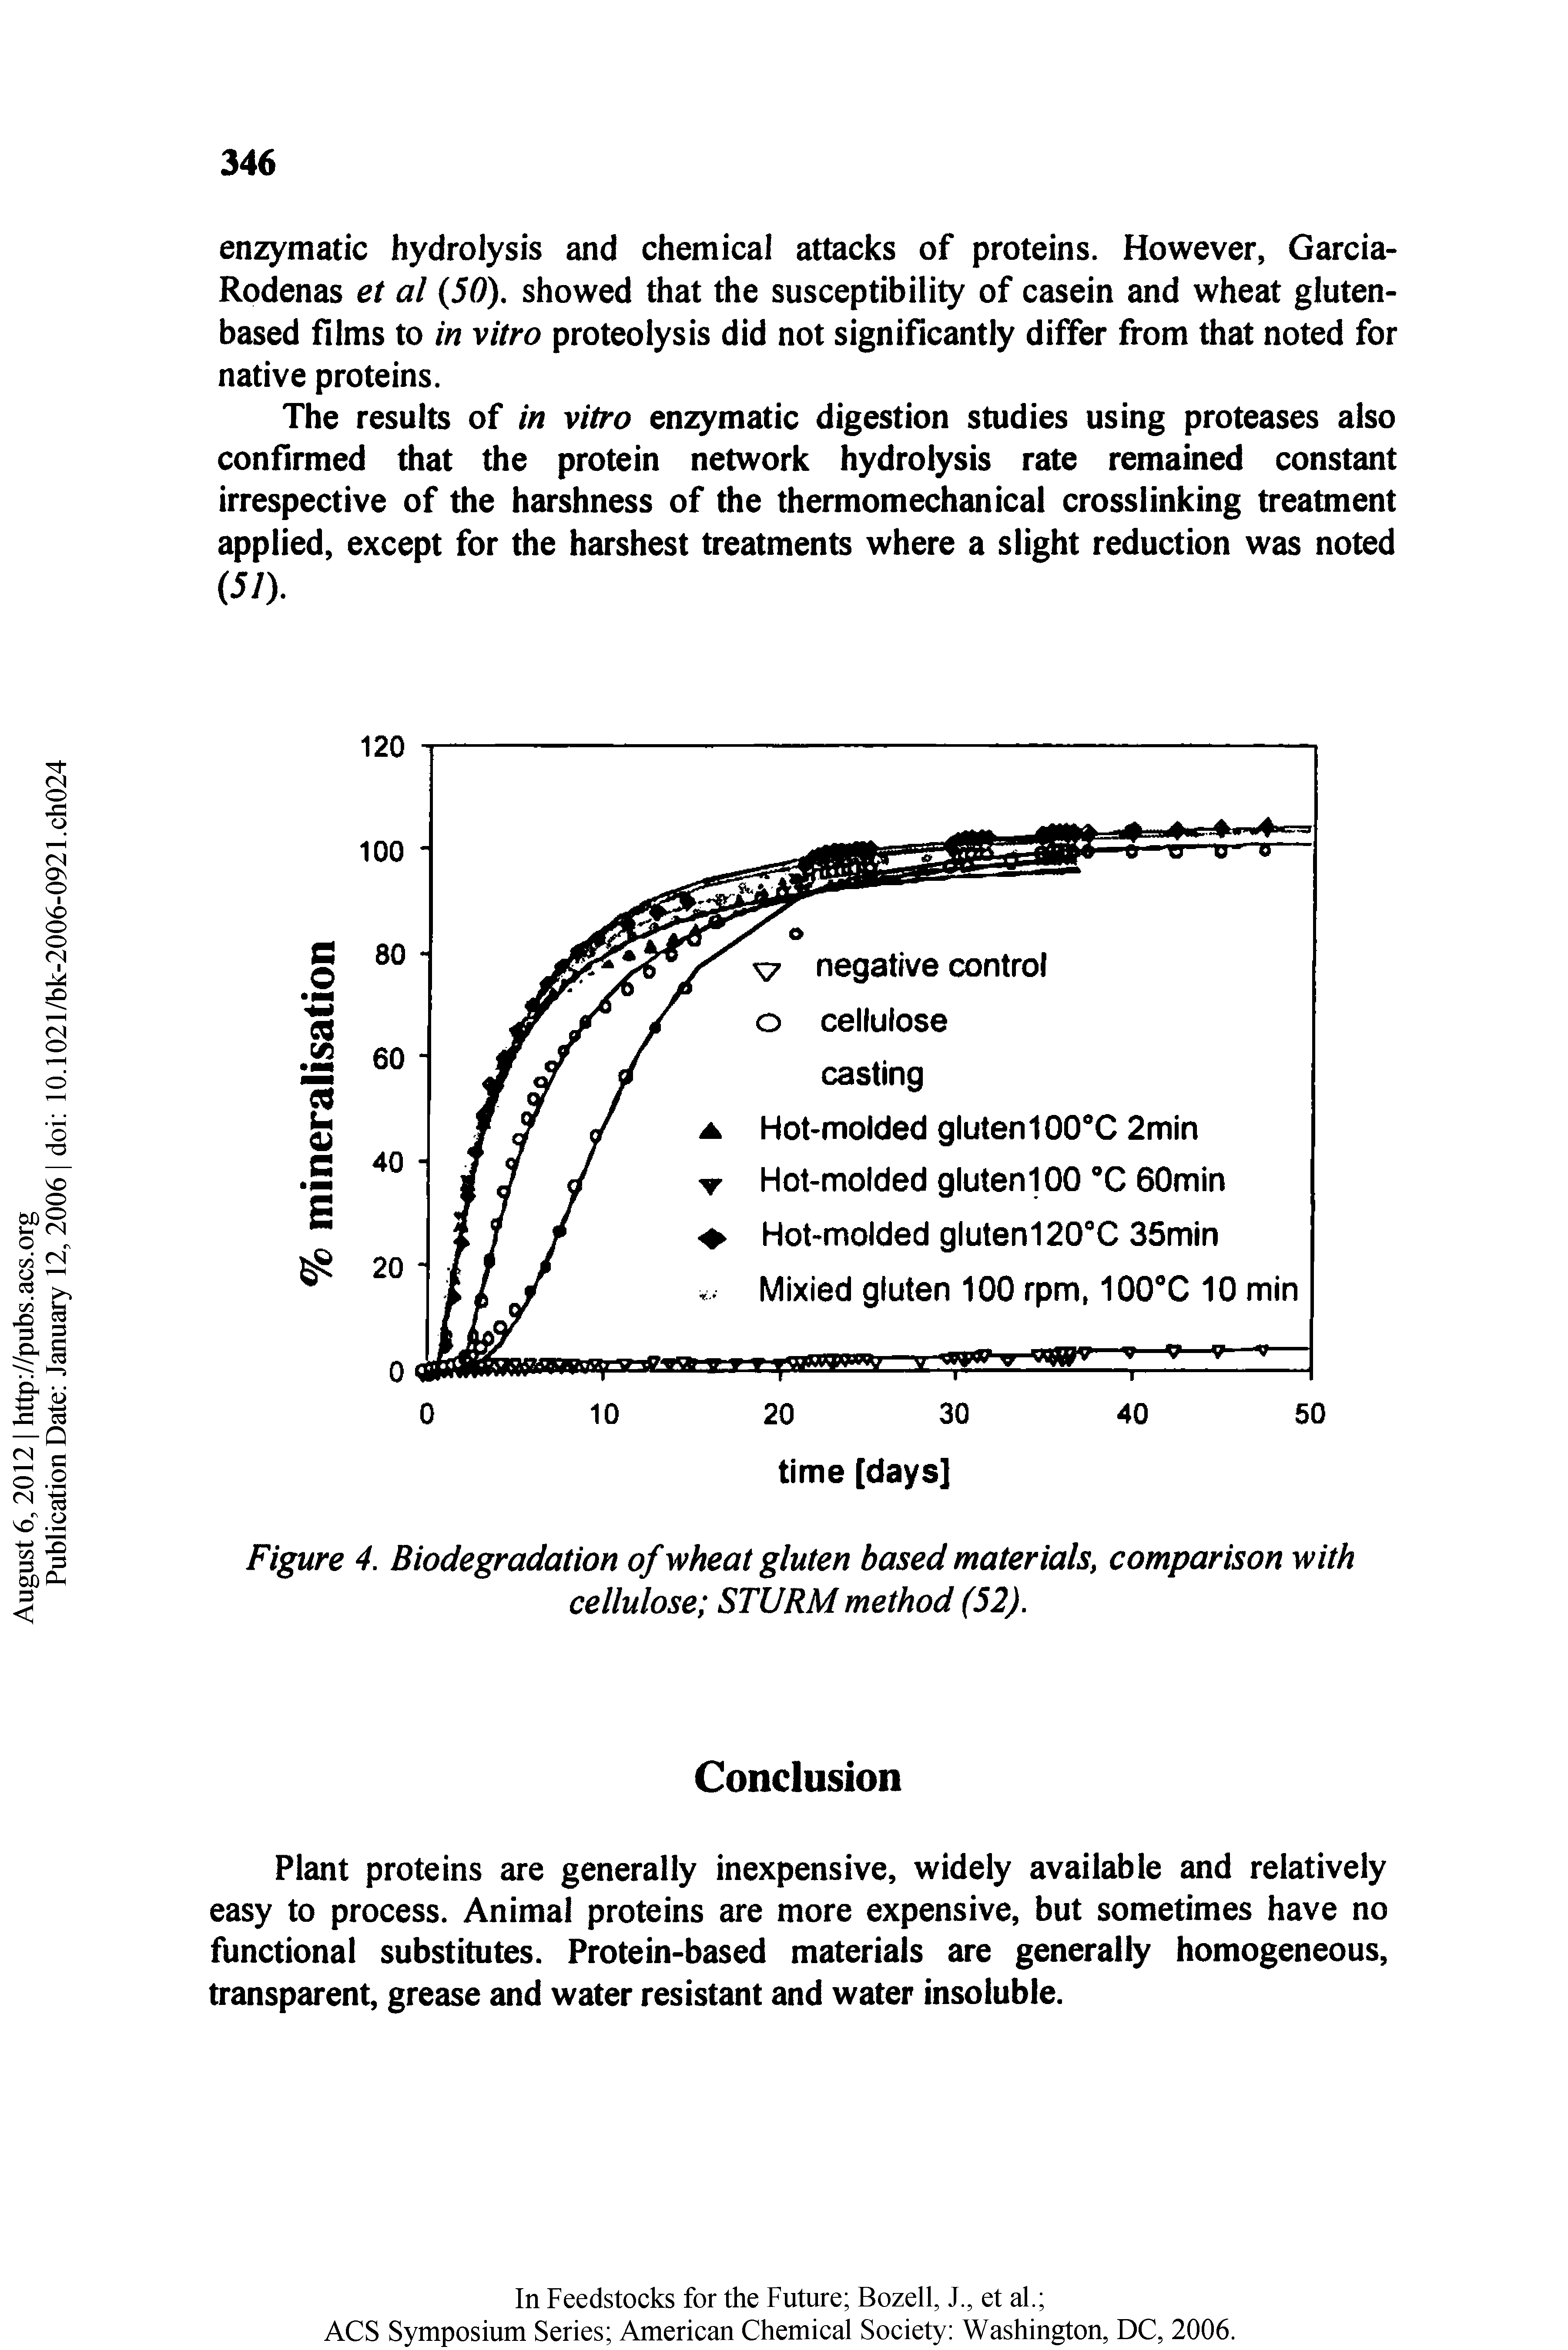 Figure 4. Biodegradation of wheat gluten based materials, comparison with cellulose STURM method (52).